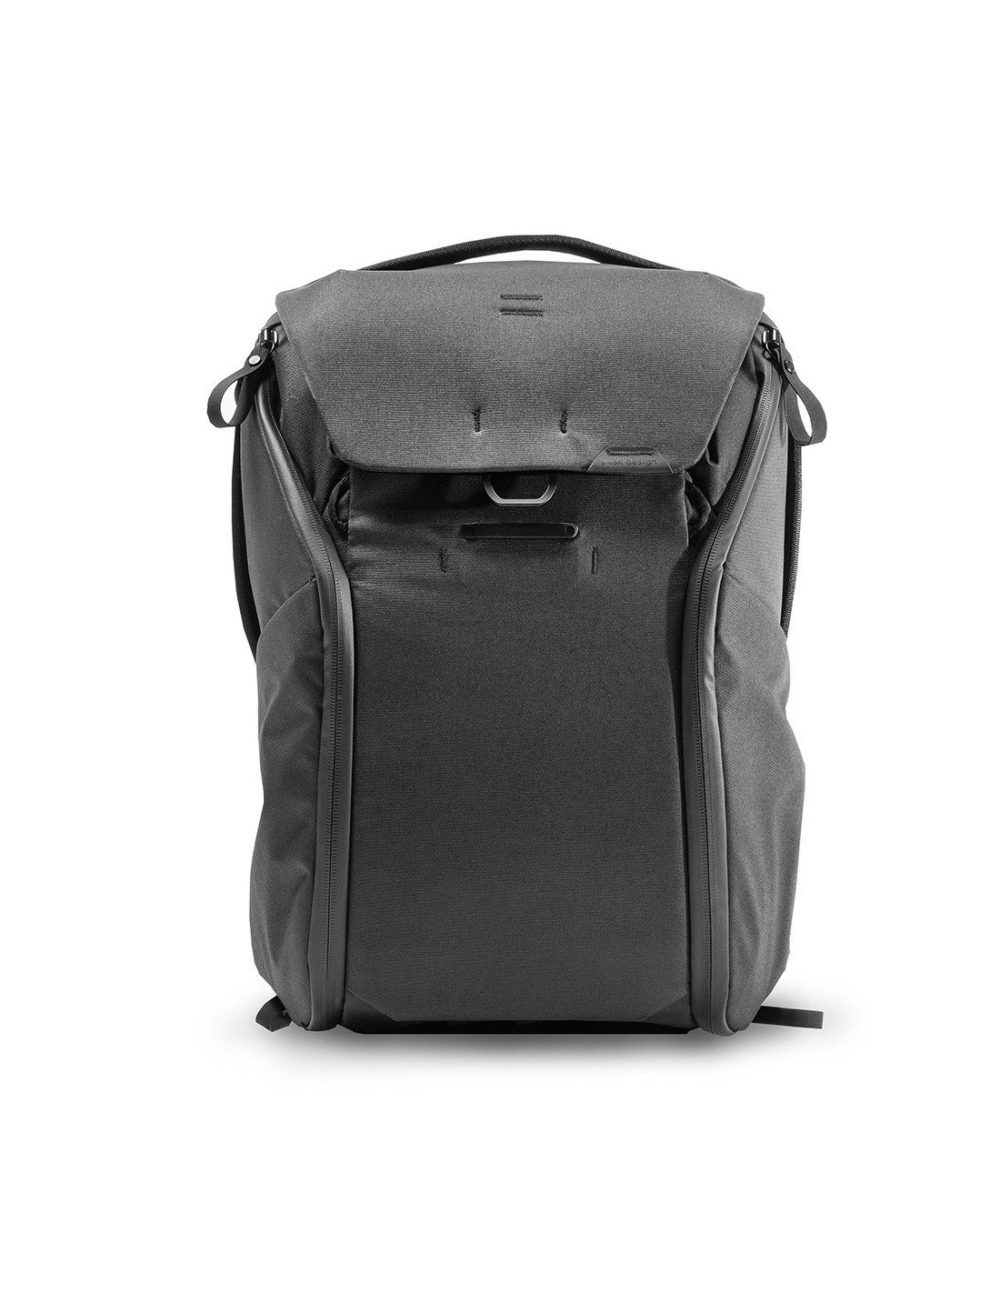 Plecak PEAK DESIGN Everyday Backpack 20L v2 - Czarny - EDLv2